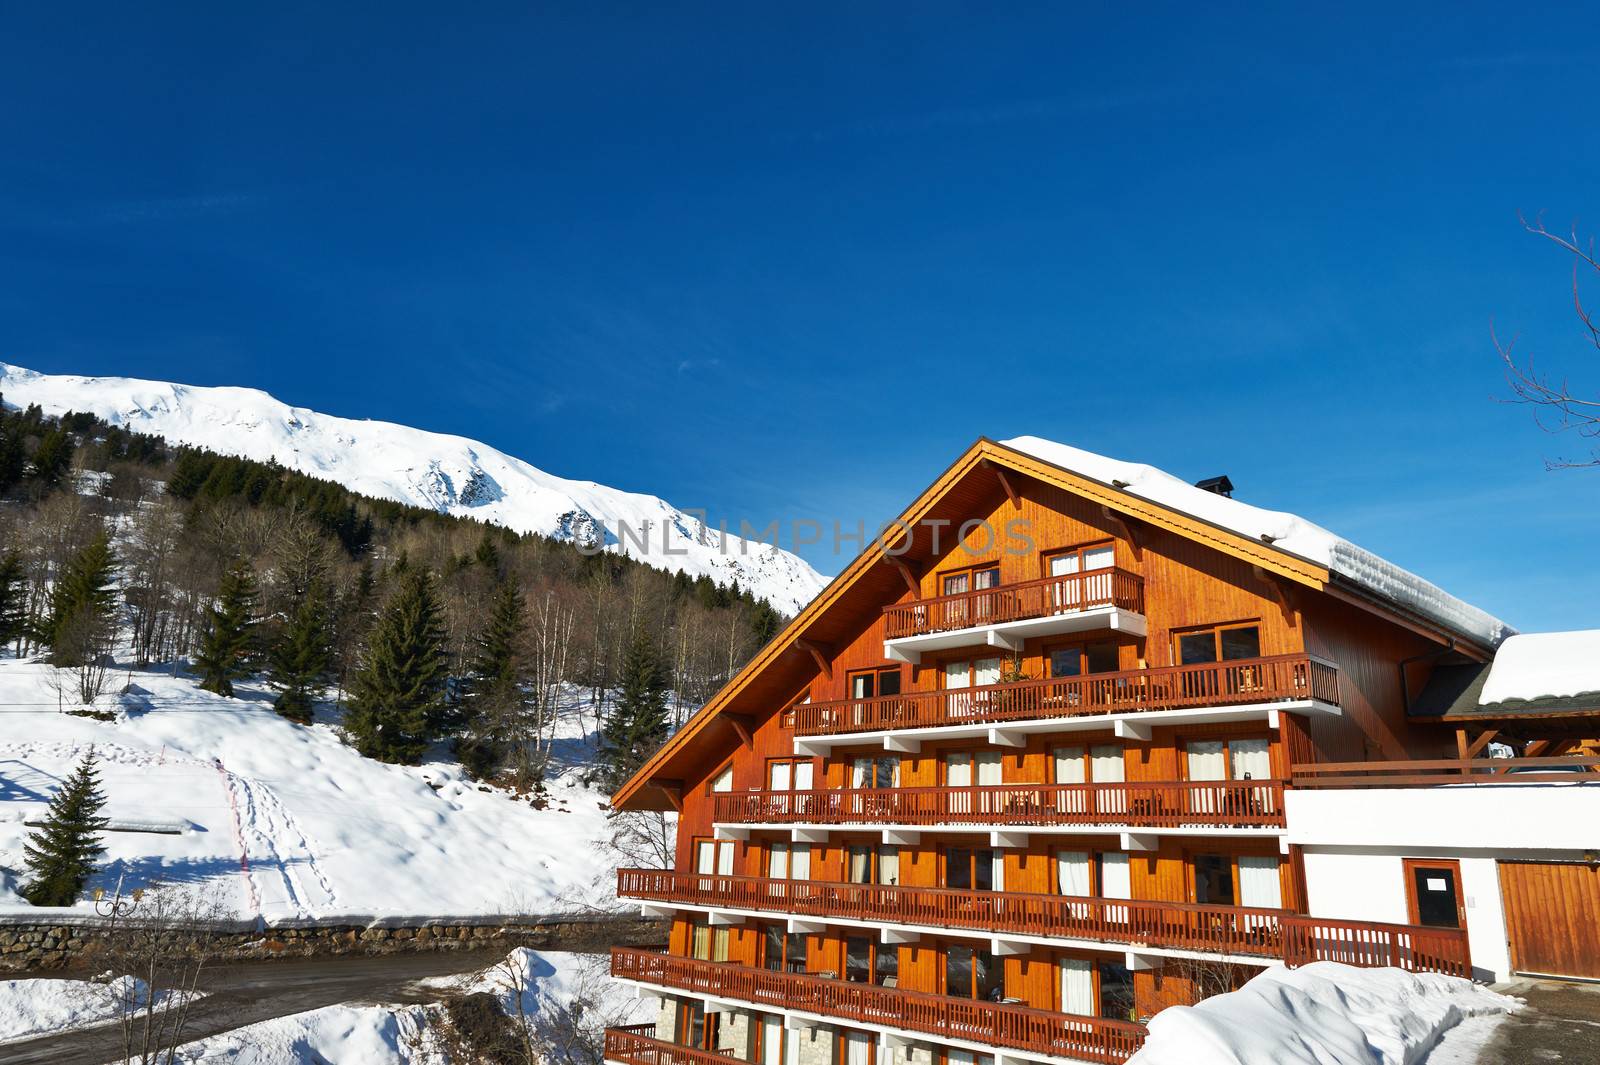 Mountain ski resort by haveseen